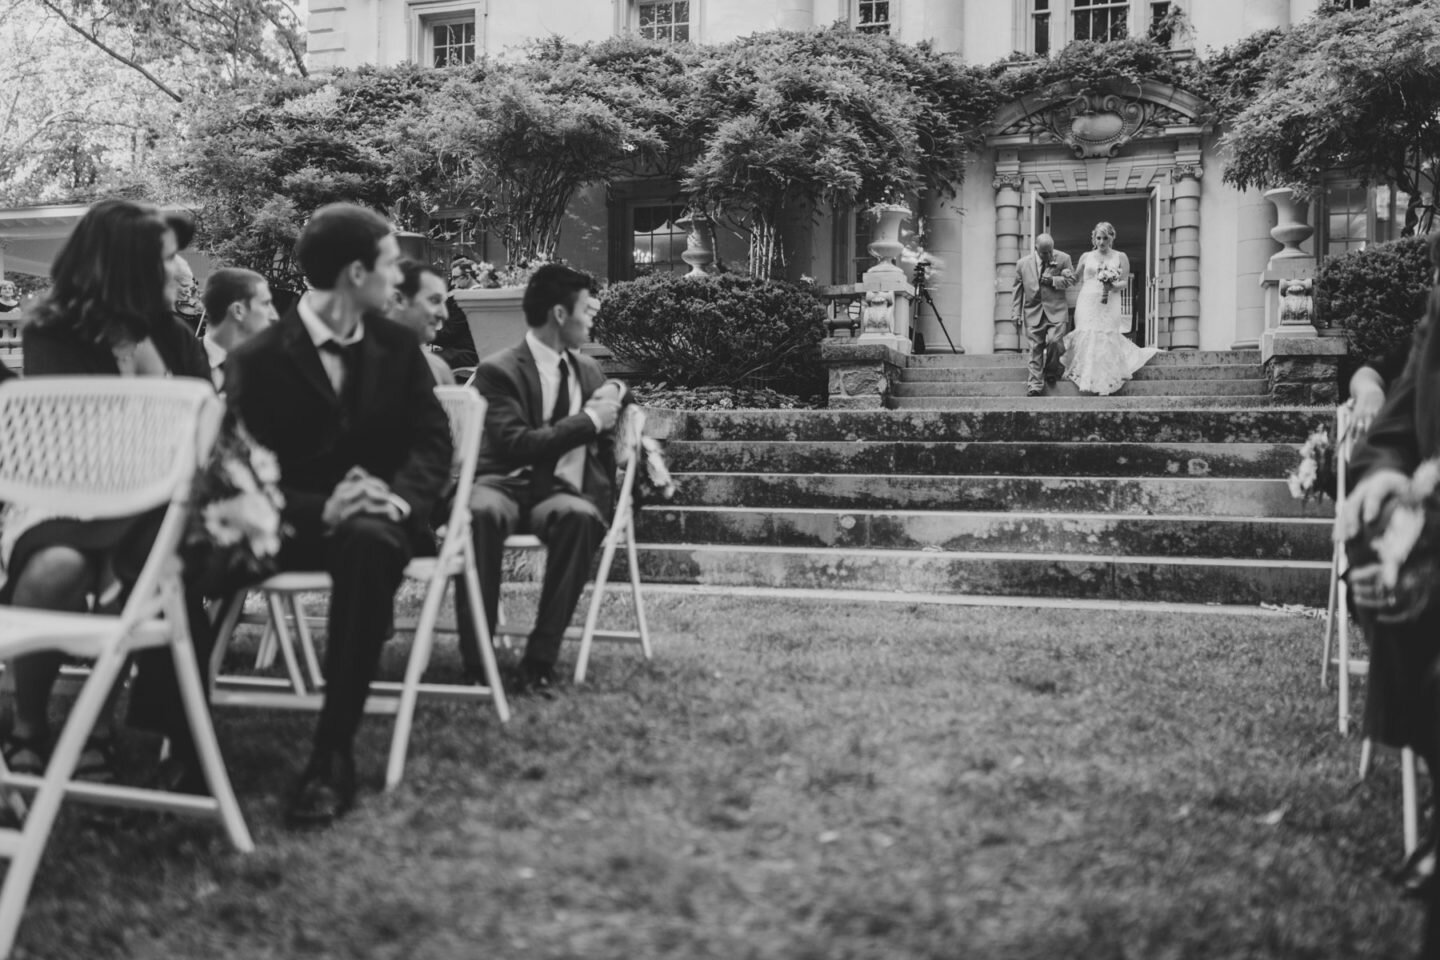 liriodendron-mansion-outdoor-wedding-artistic-creative-wedding-photography-28.jpg